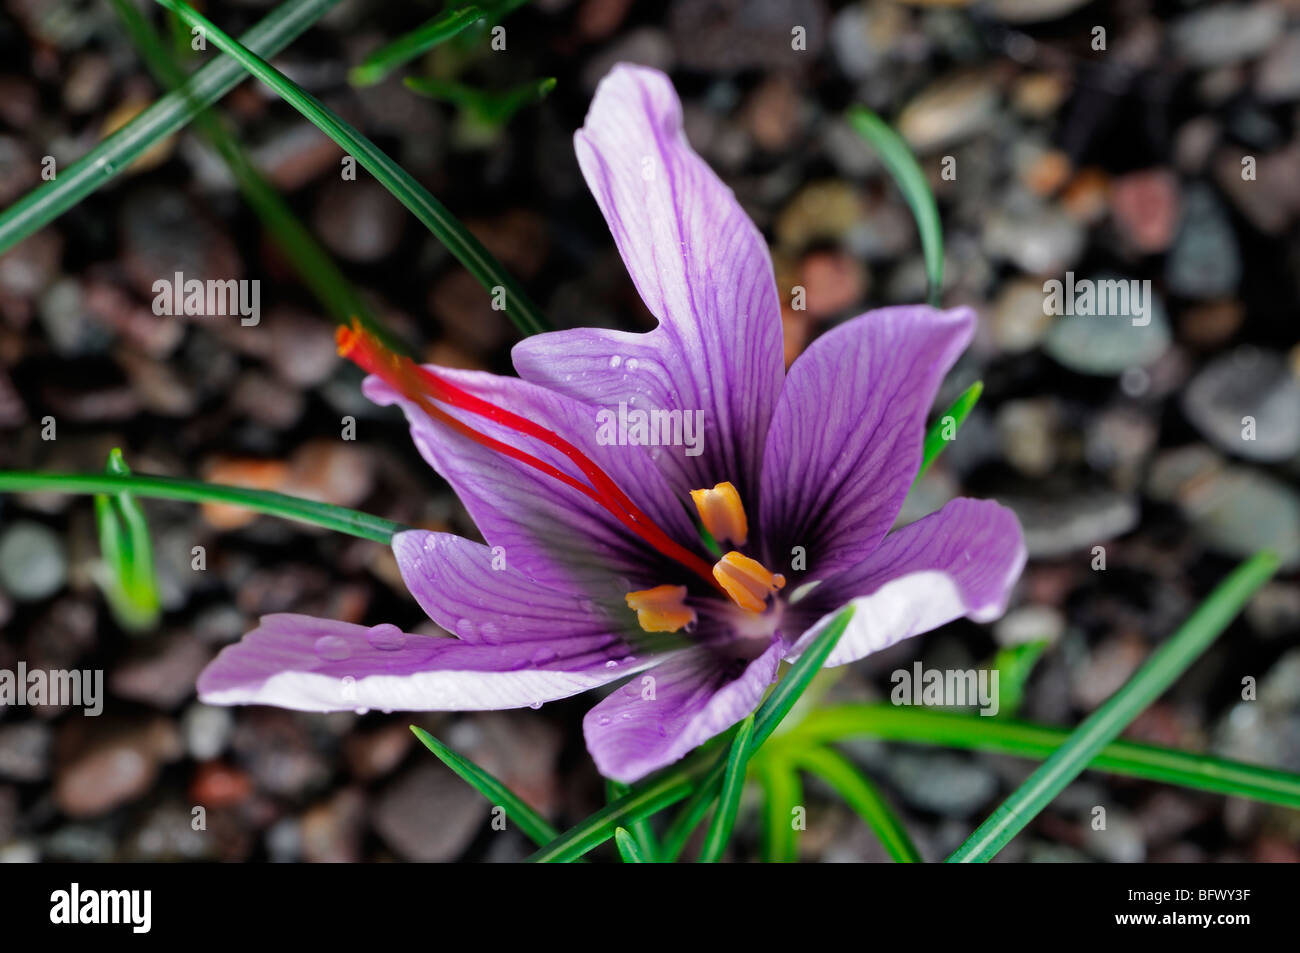 Crocus sativus Autumn Crocus Saffron flower single one open bloom blossom purple red stamen Stock Photo